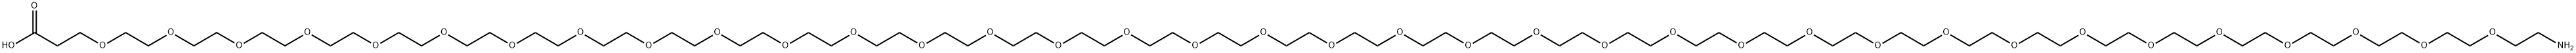 Amino-PEG24-acid|Amino-PEG24-acid